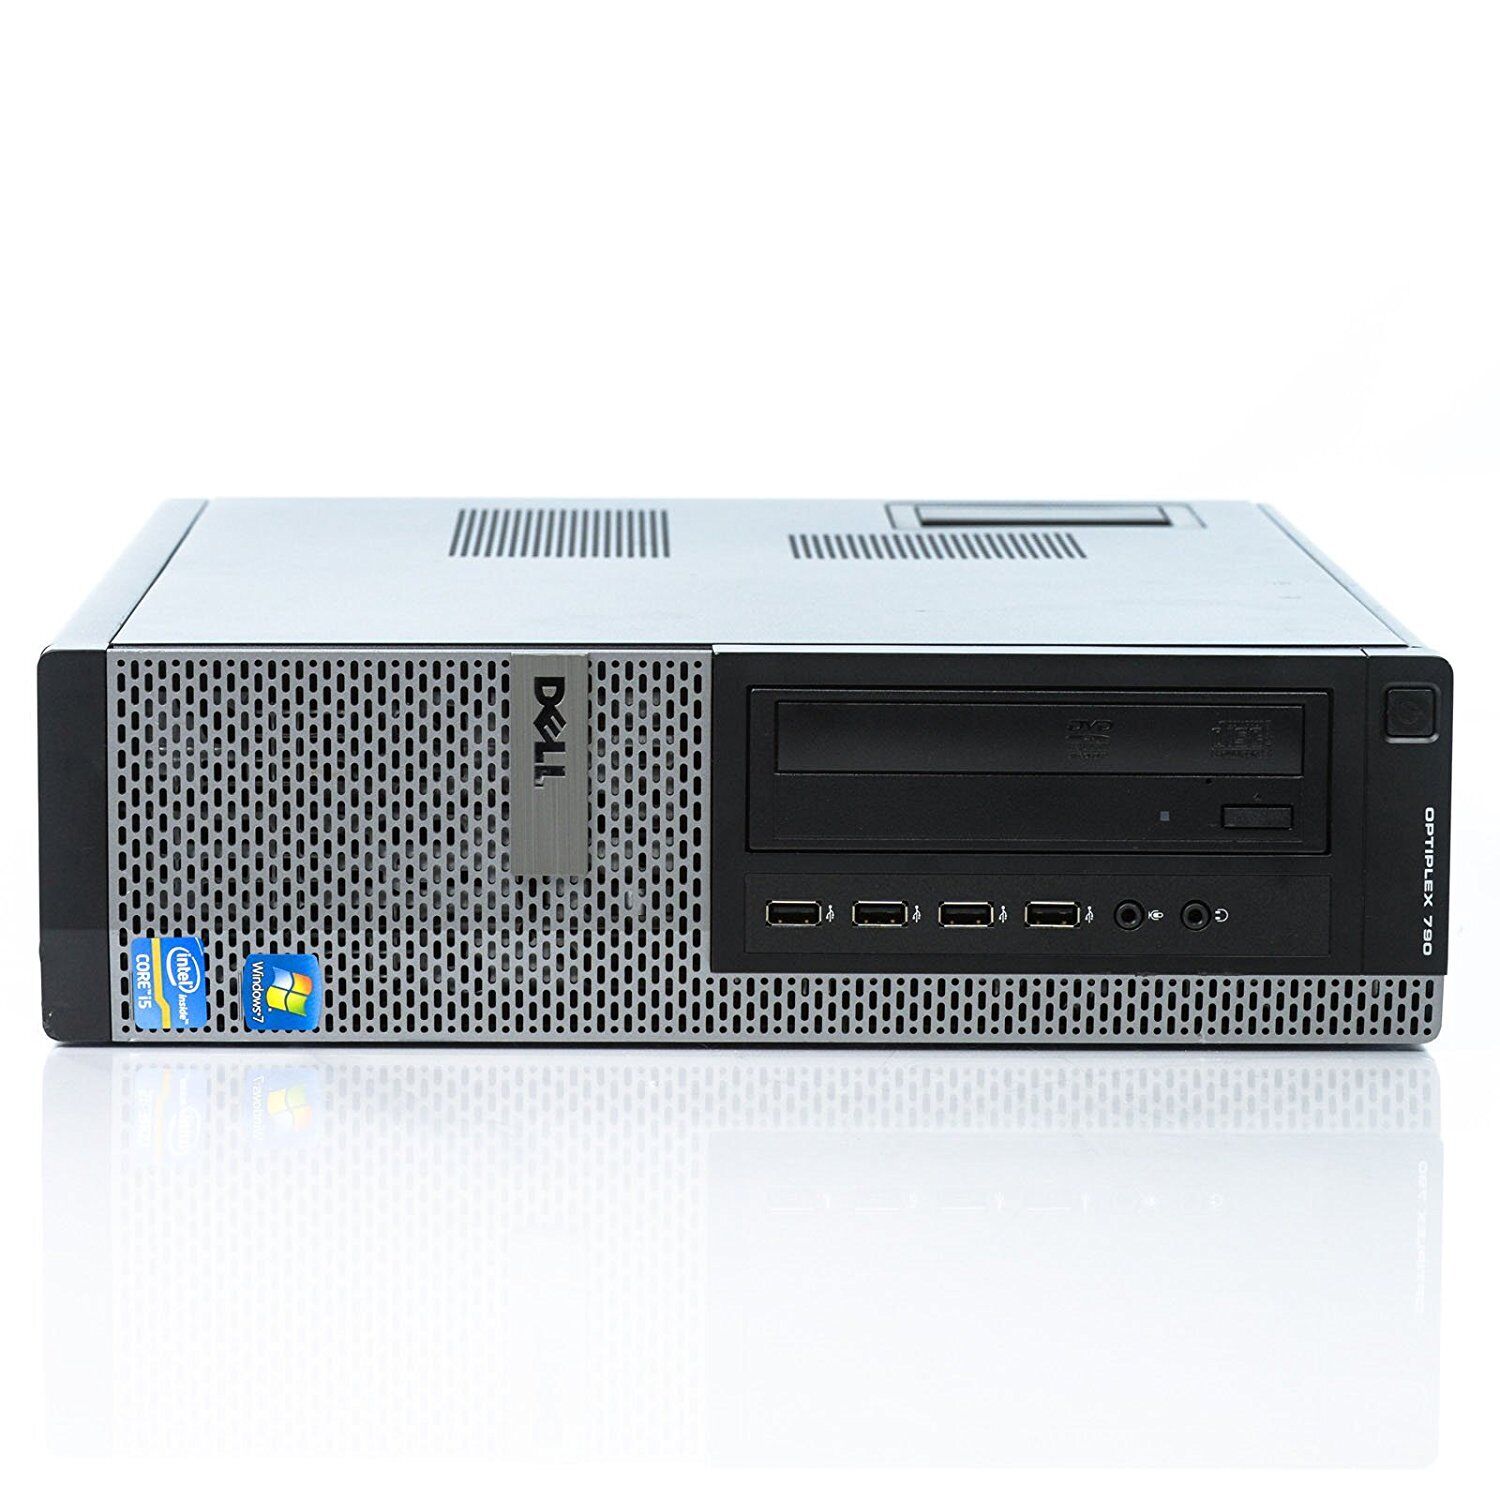 Customize Dell Optiplex 790 Desktop Computer with Windows 7 x32bit Home or Pro